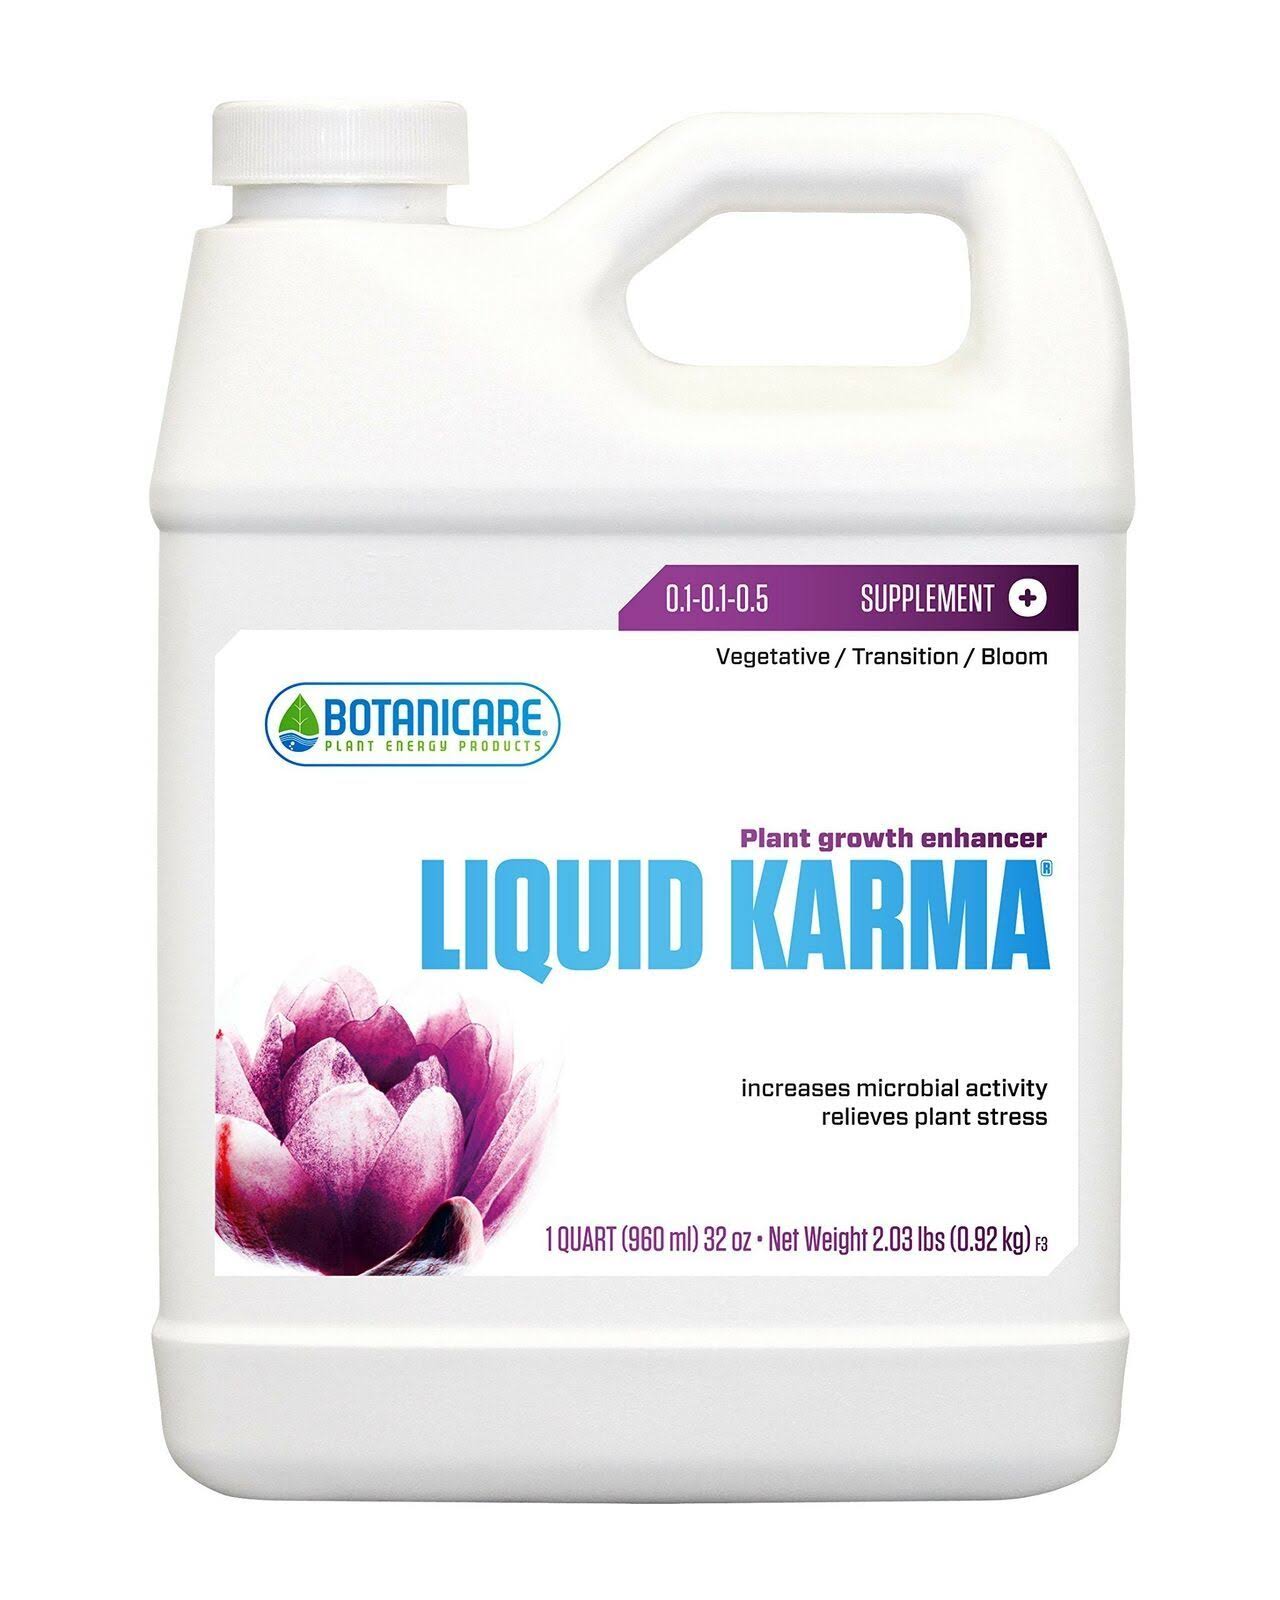 Botanicare Liquid Karma Plant Growth Enhancer Supplement 0.1-0.1-0.5 Formula - 1qt